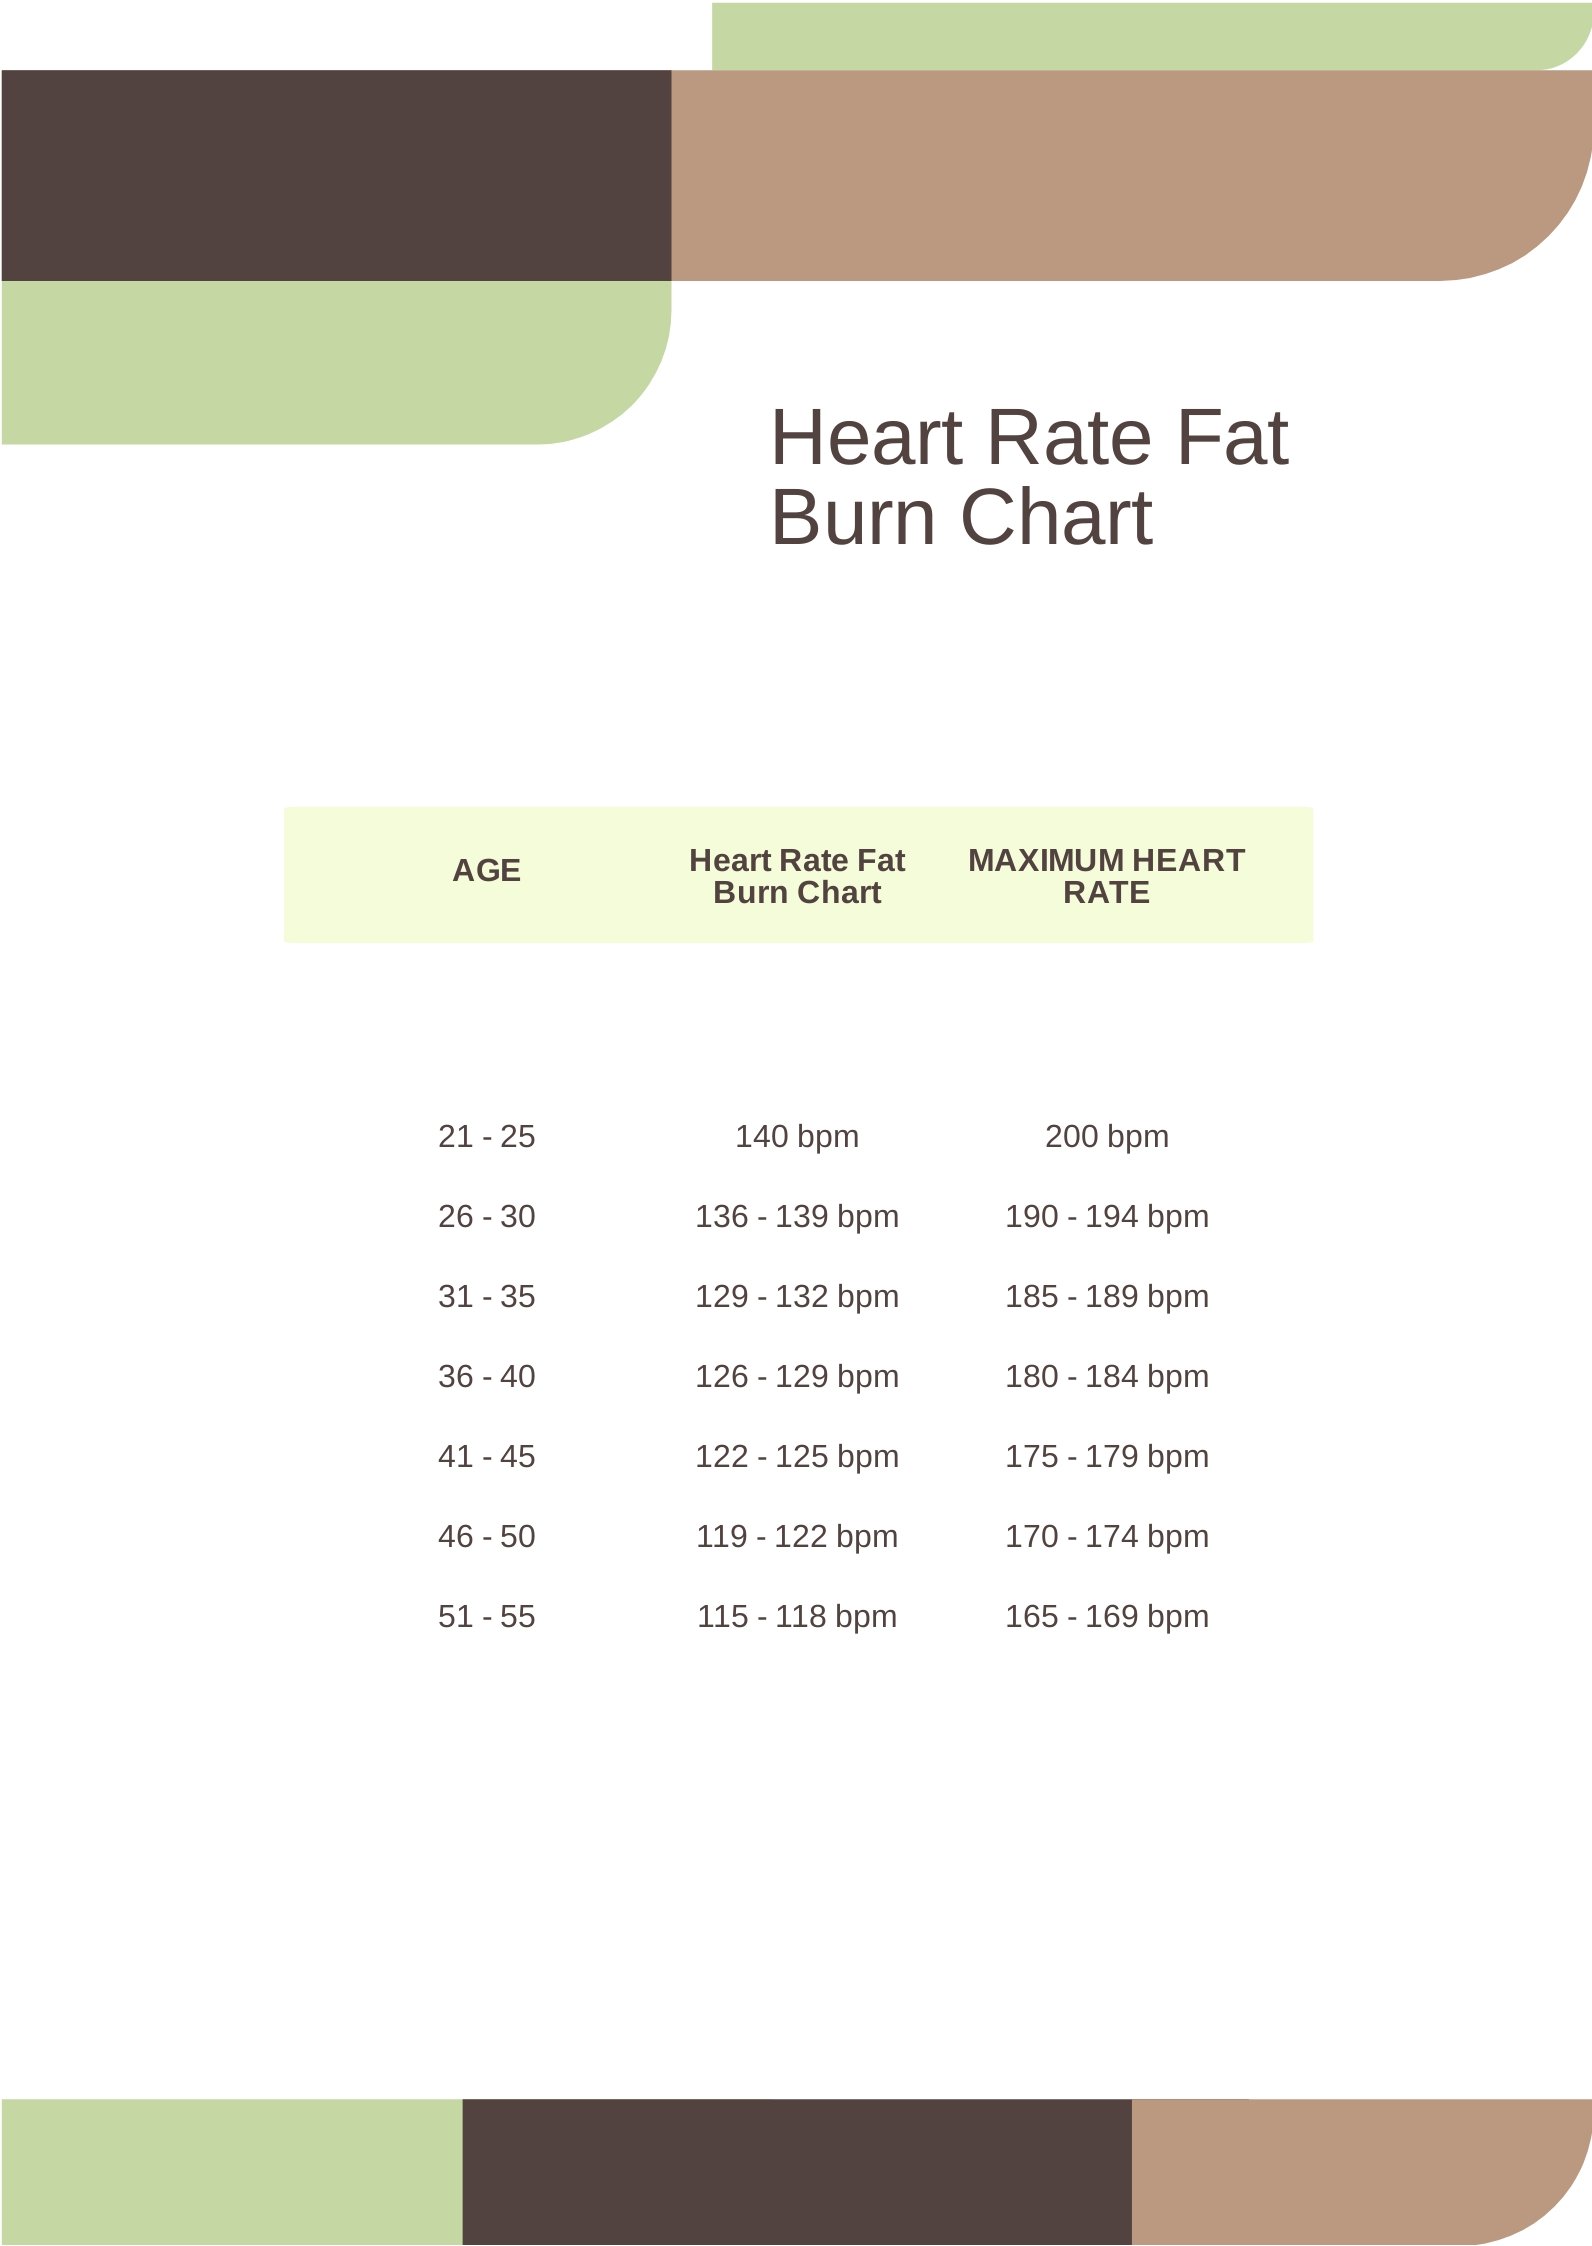 Heart Rate Fat Burn Chart